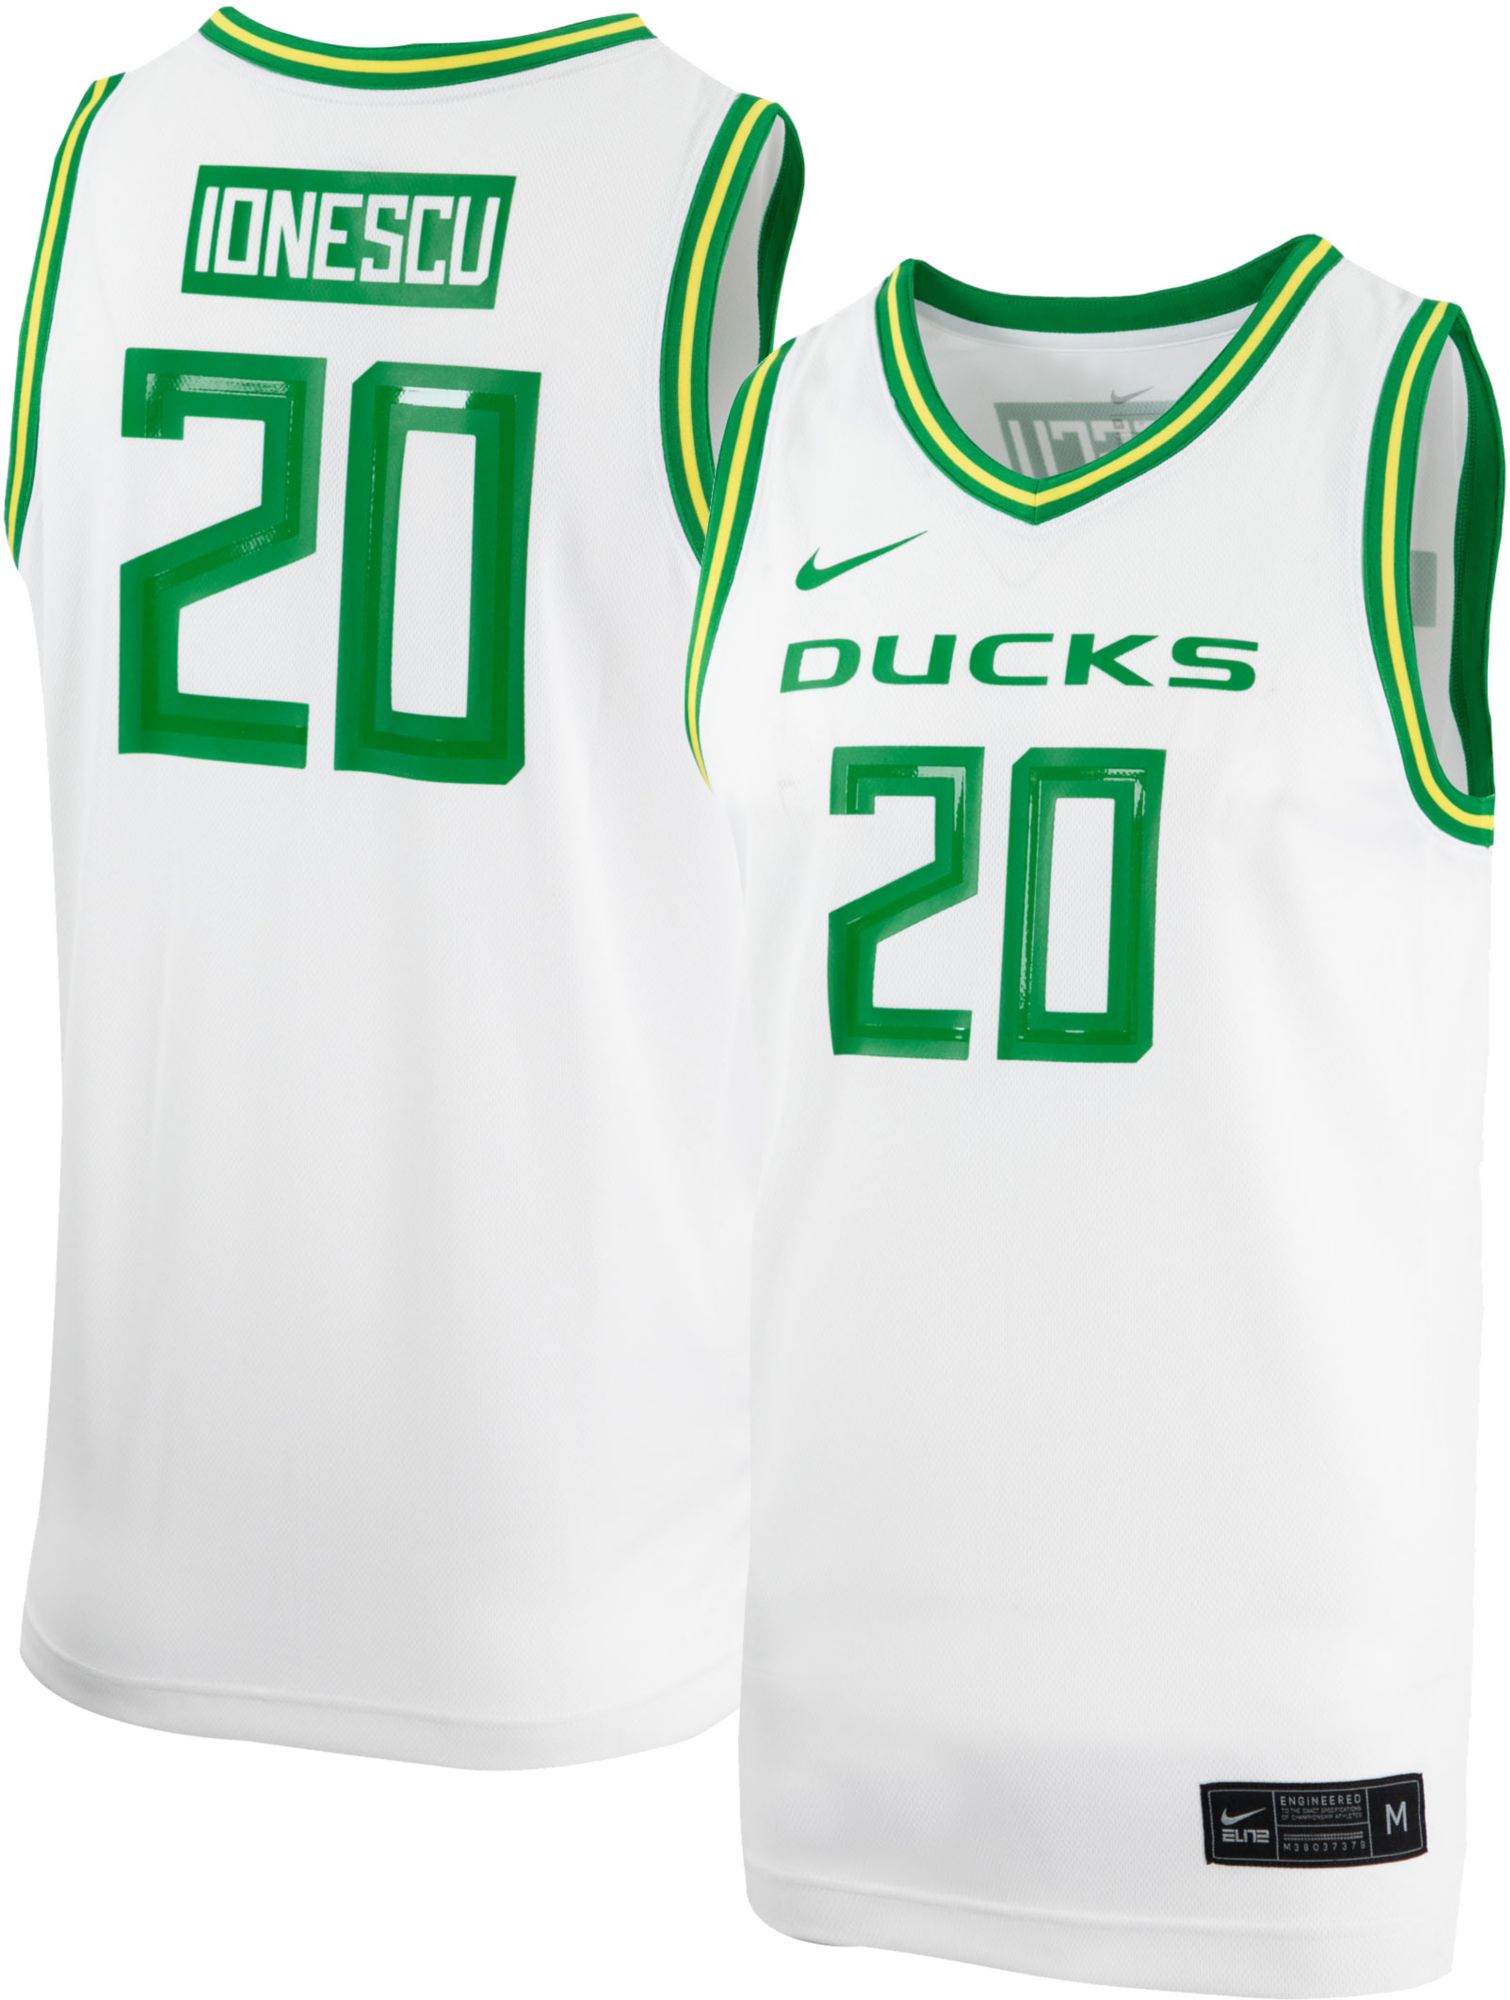 Unisex Nike #20 Green Oregon Ducks Women's Basketball Jersey T-Shirt